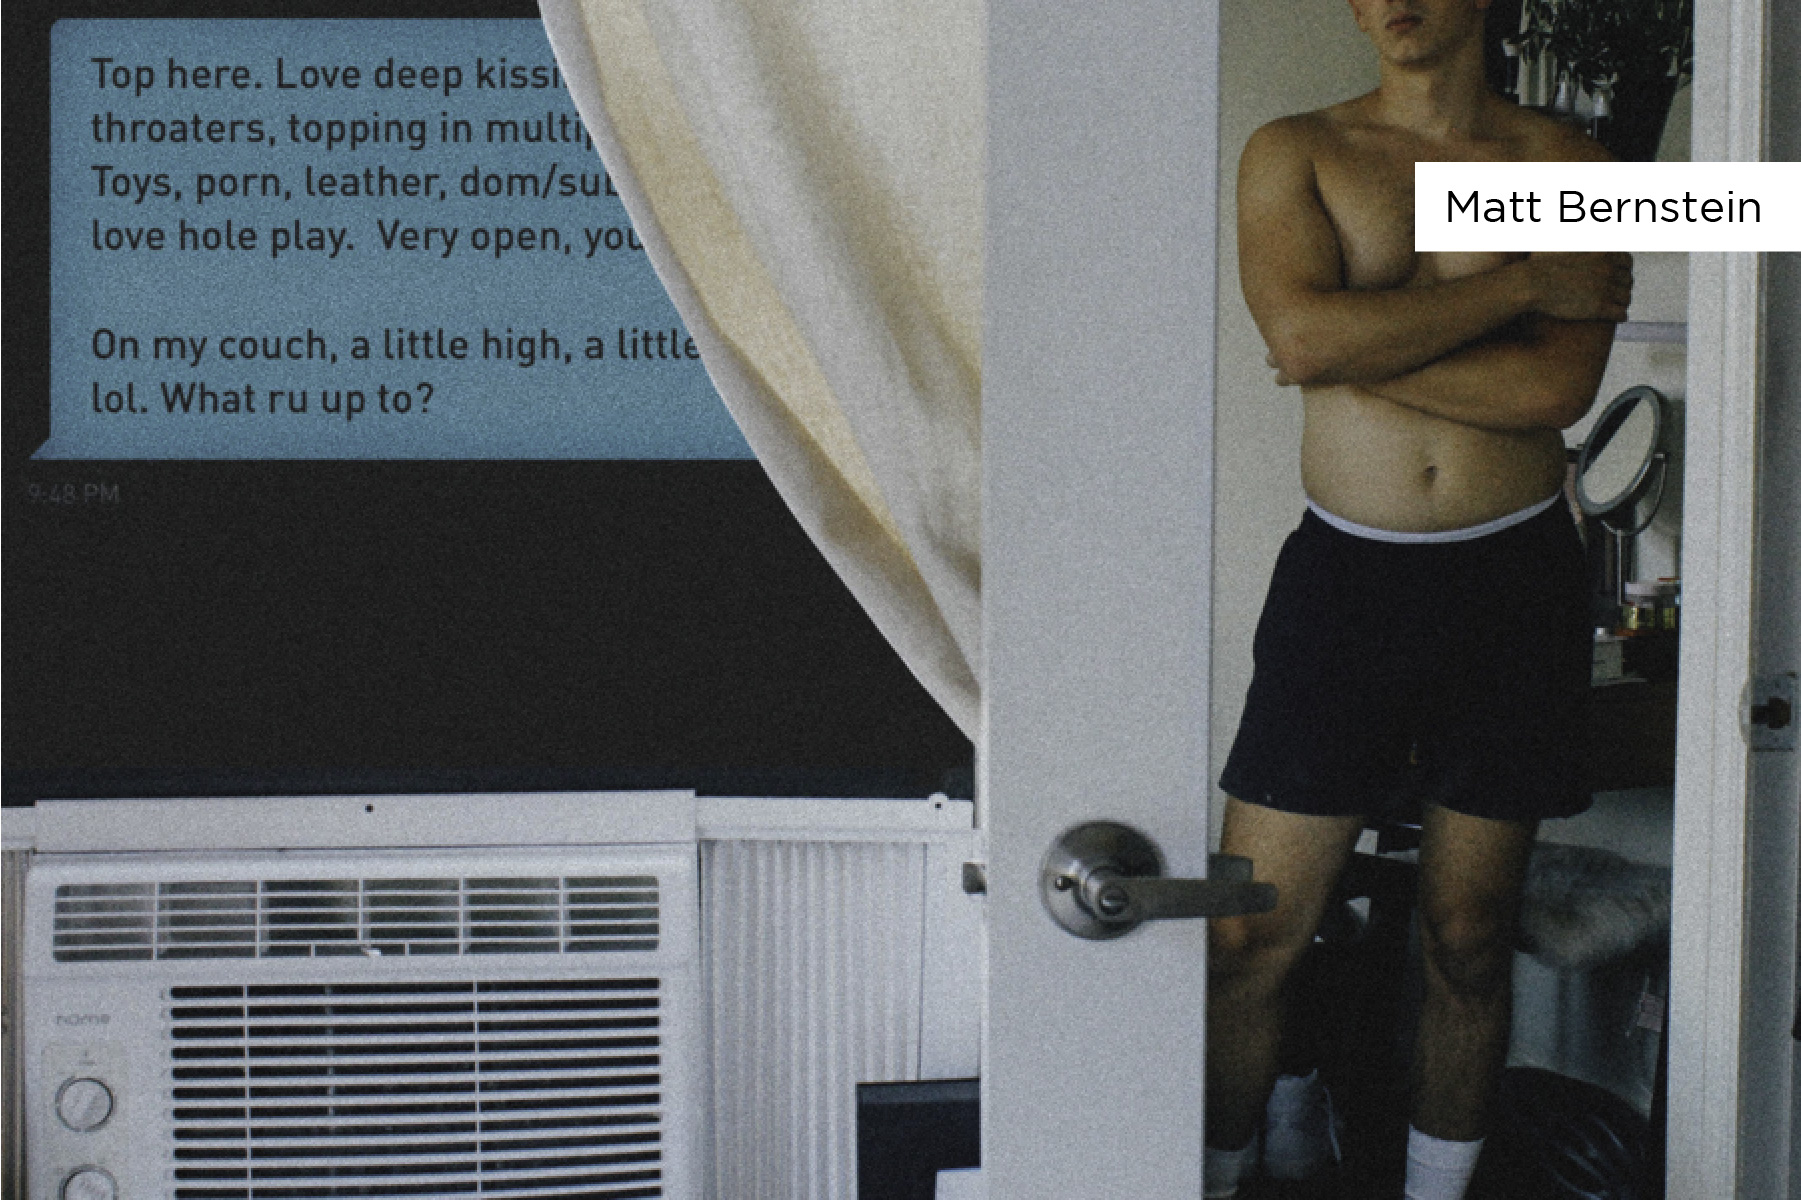 Environmental portrait of a man in underwear looking in a mirror